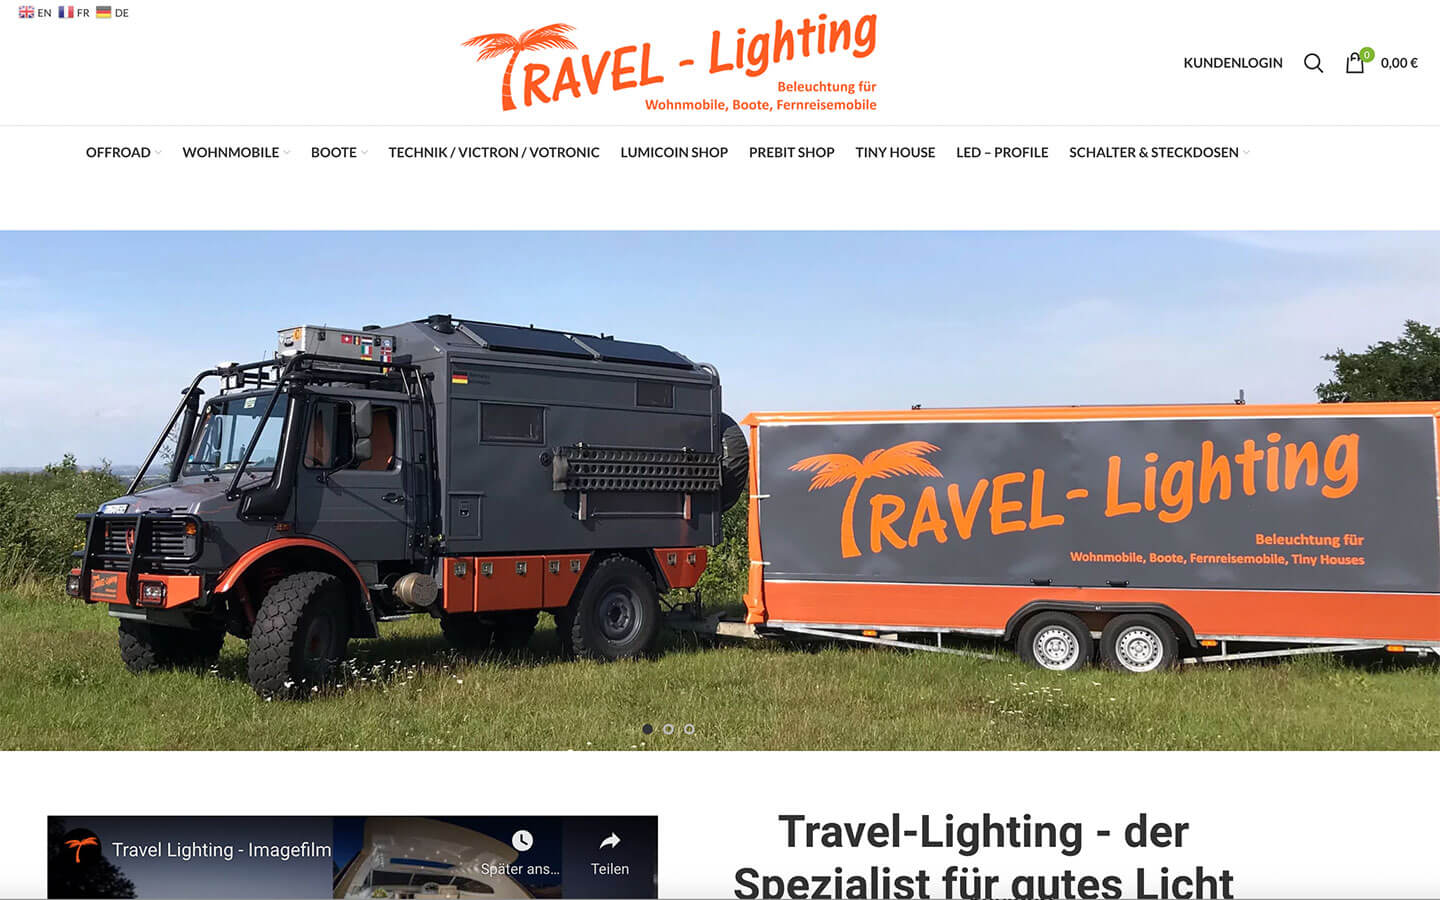 Travel-Lighting onlineshop